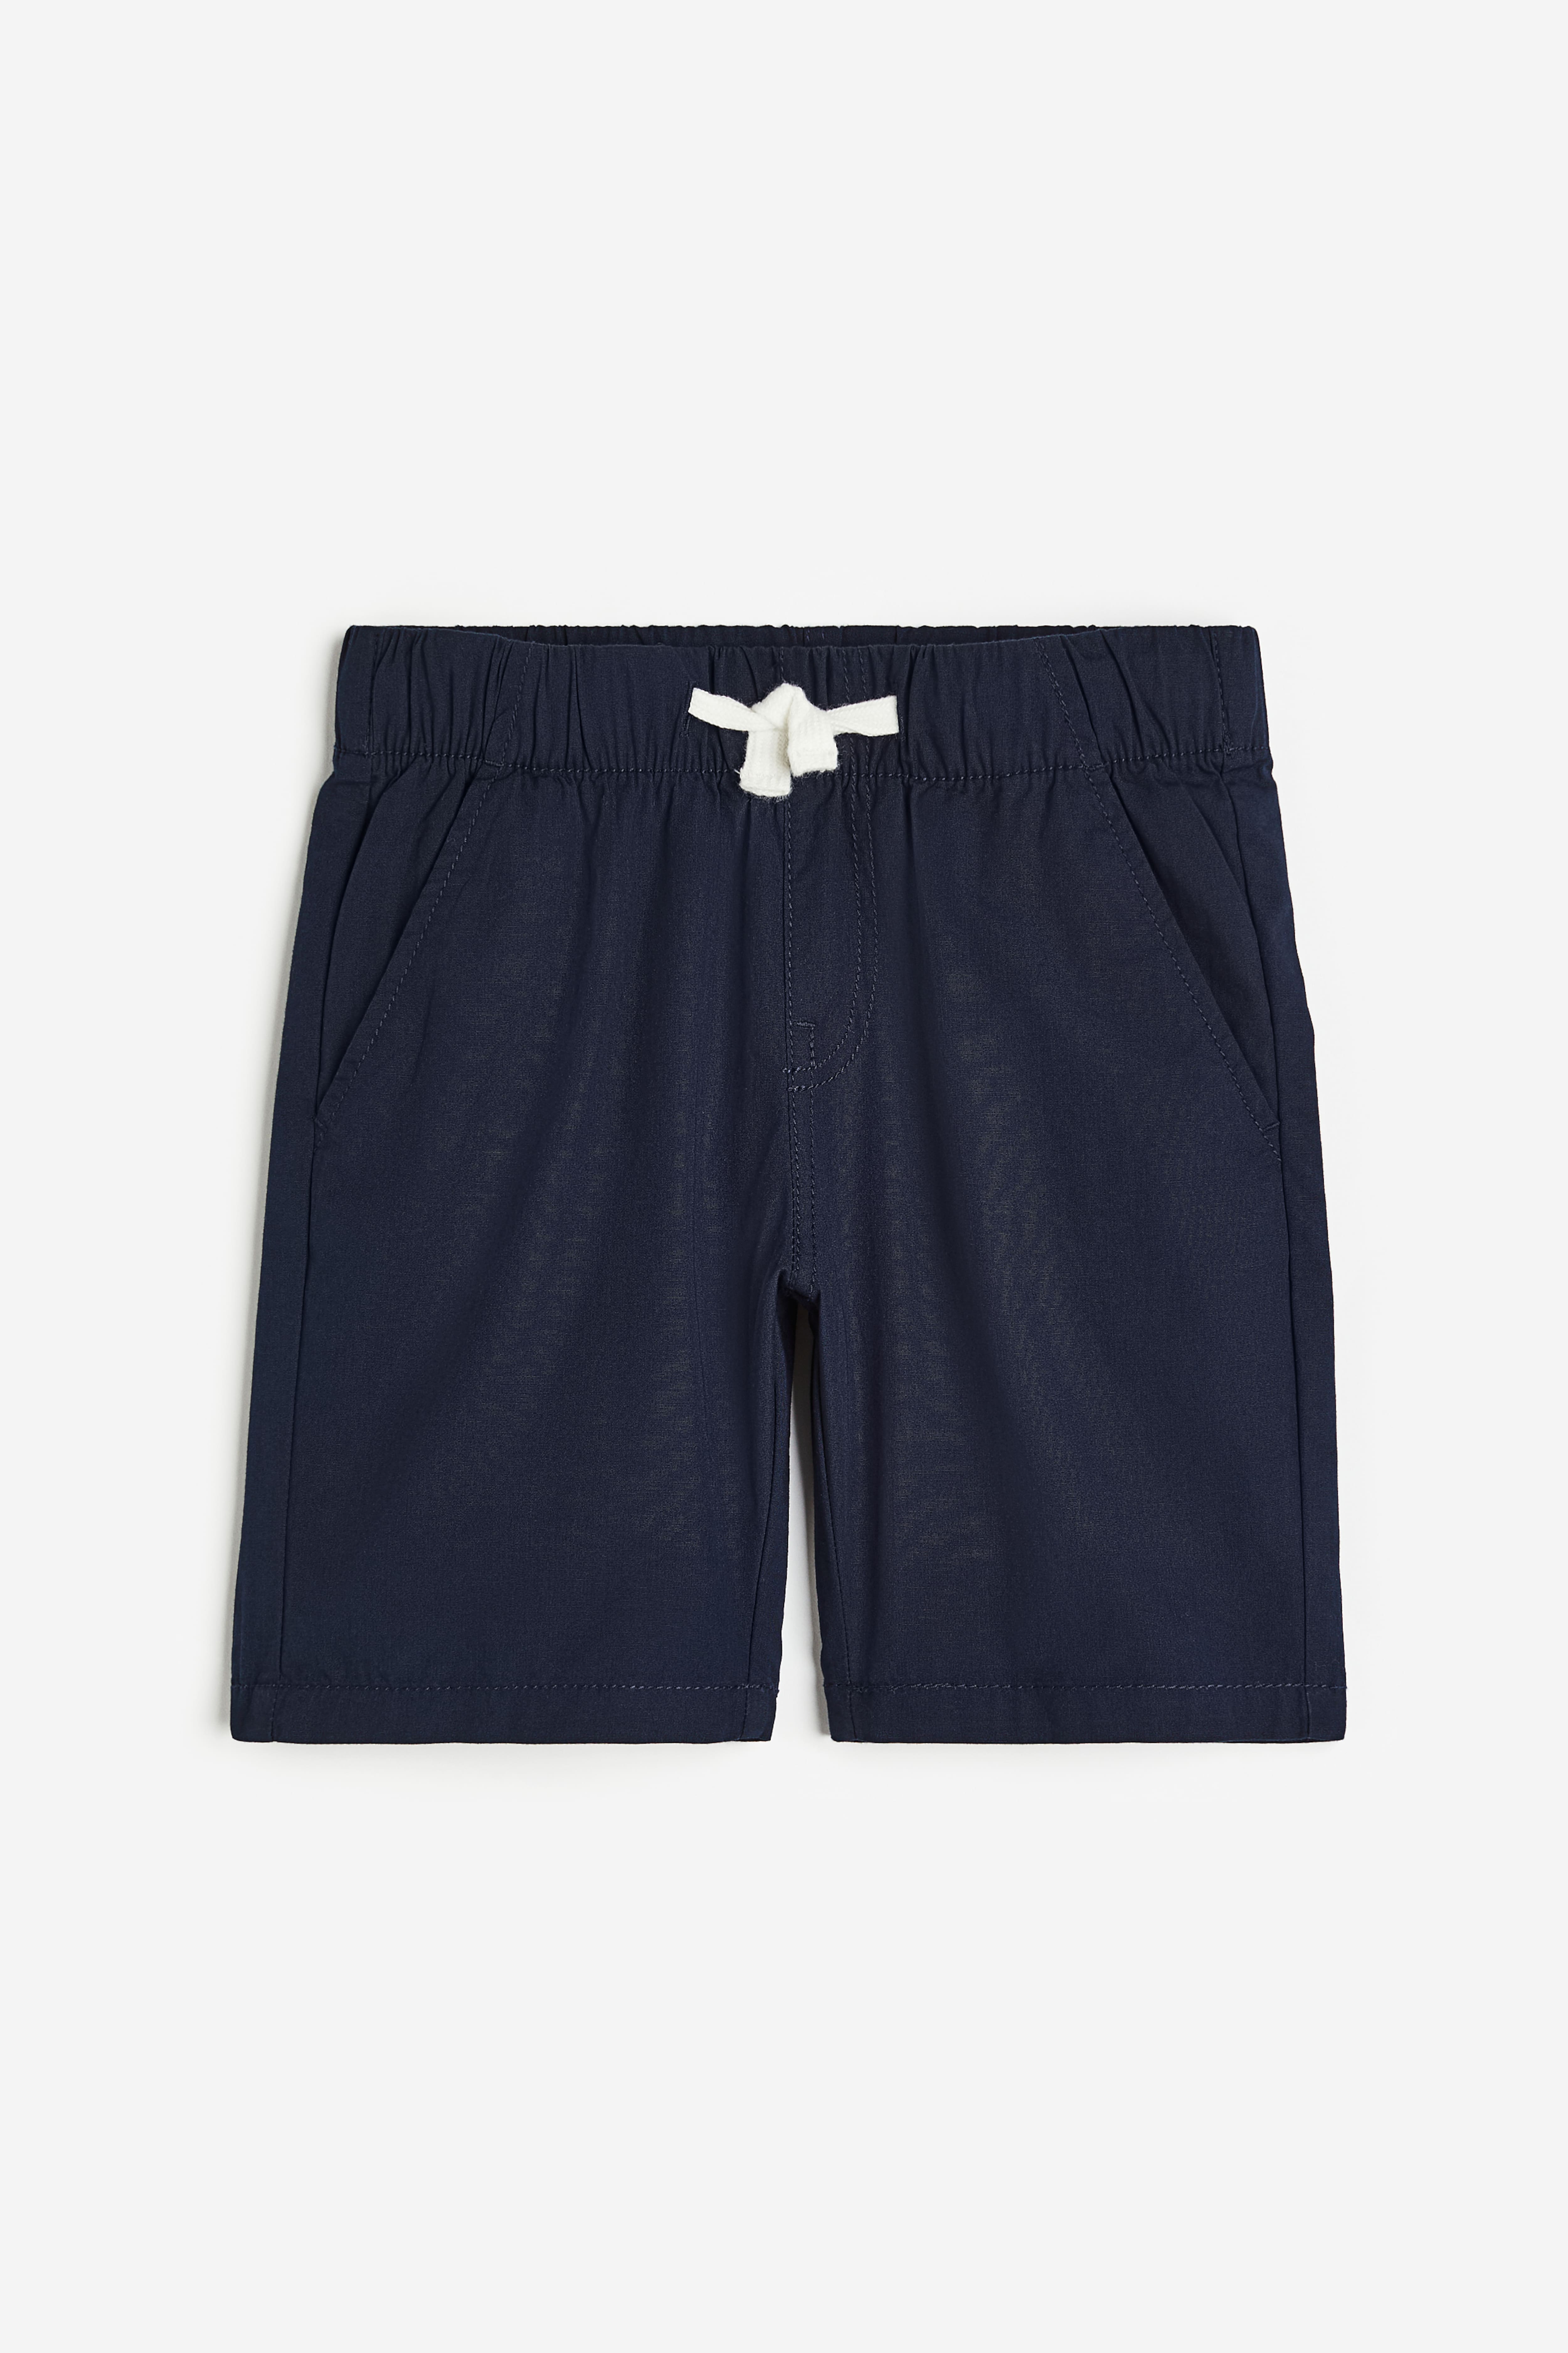 Sport Cotton Bermuda Deck Shorts